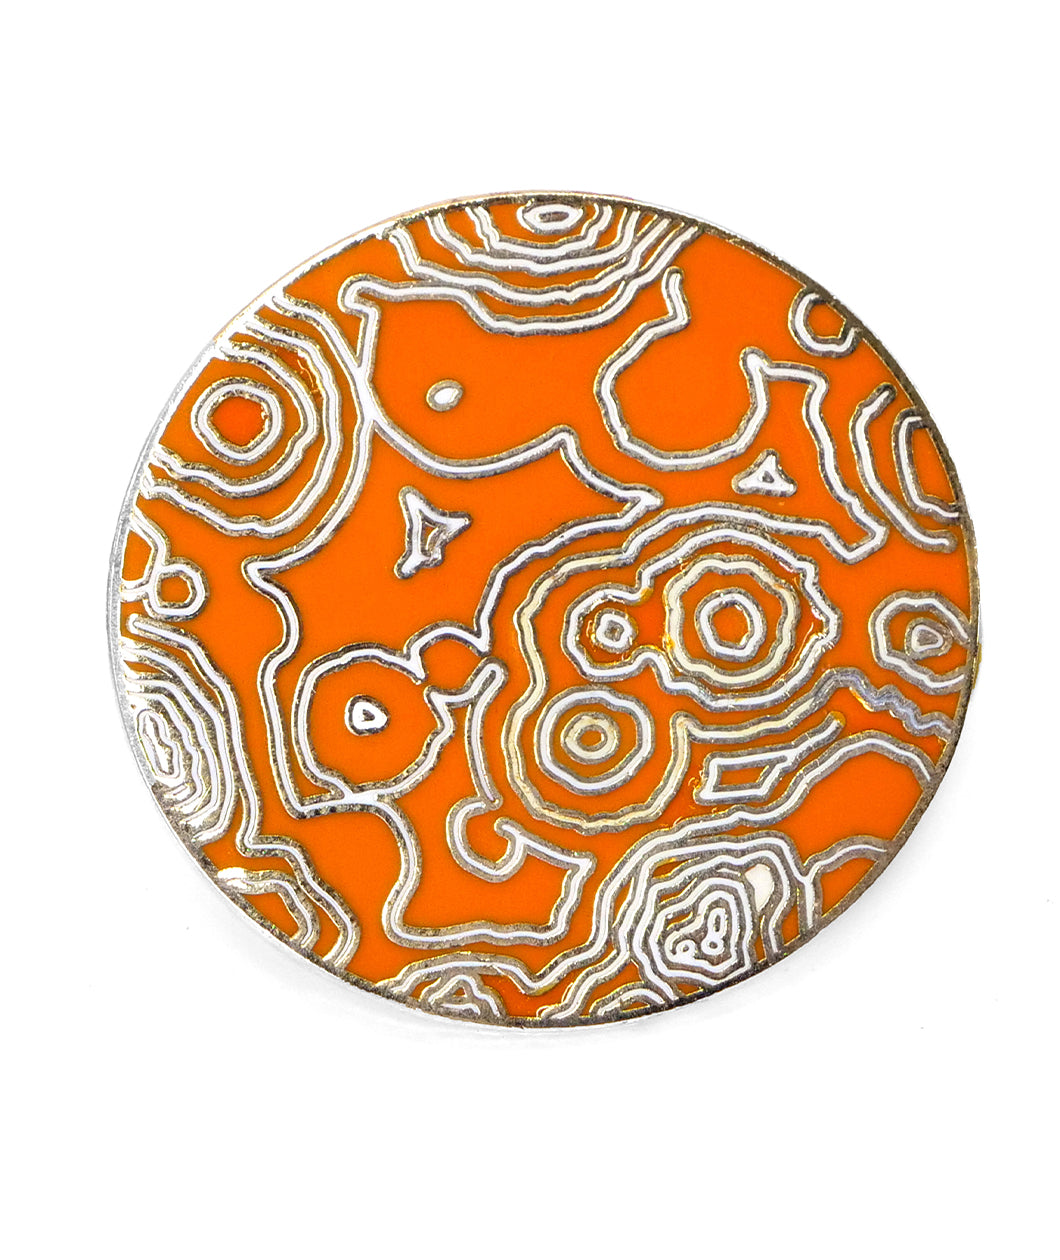 A NileRed circular orange pins showing abstract lines. 